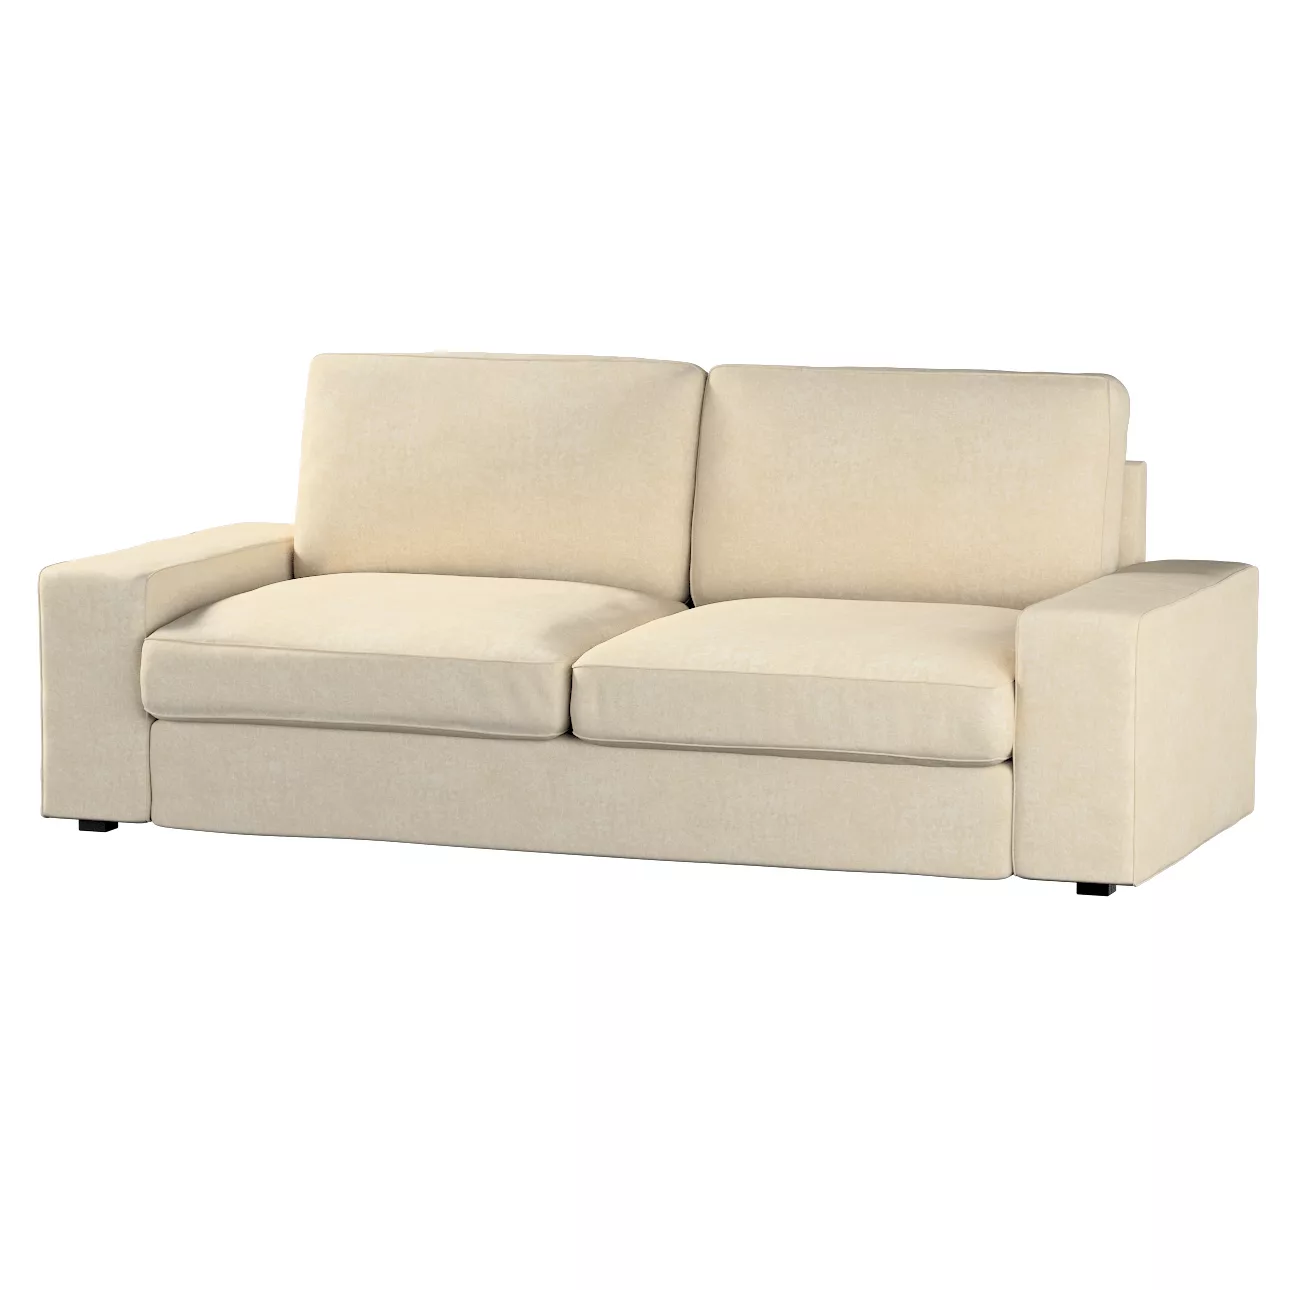 Bezug für Kivik 3-Sitzer Sofa, grau-beige, Bezug für Sofa Kivik 3-Sitzer, C günstig online kaufen